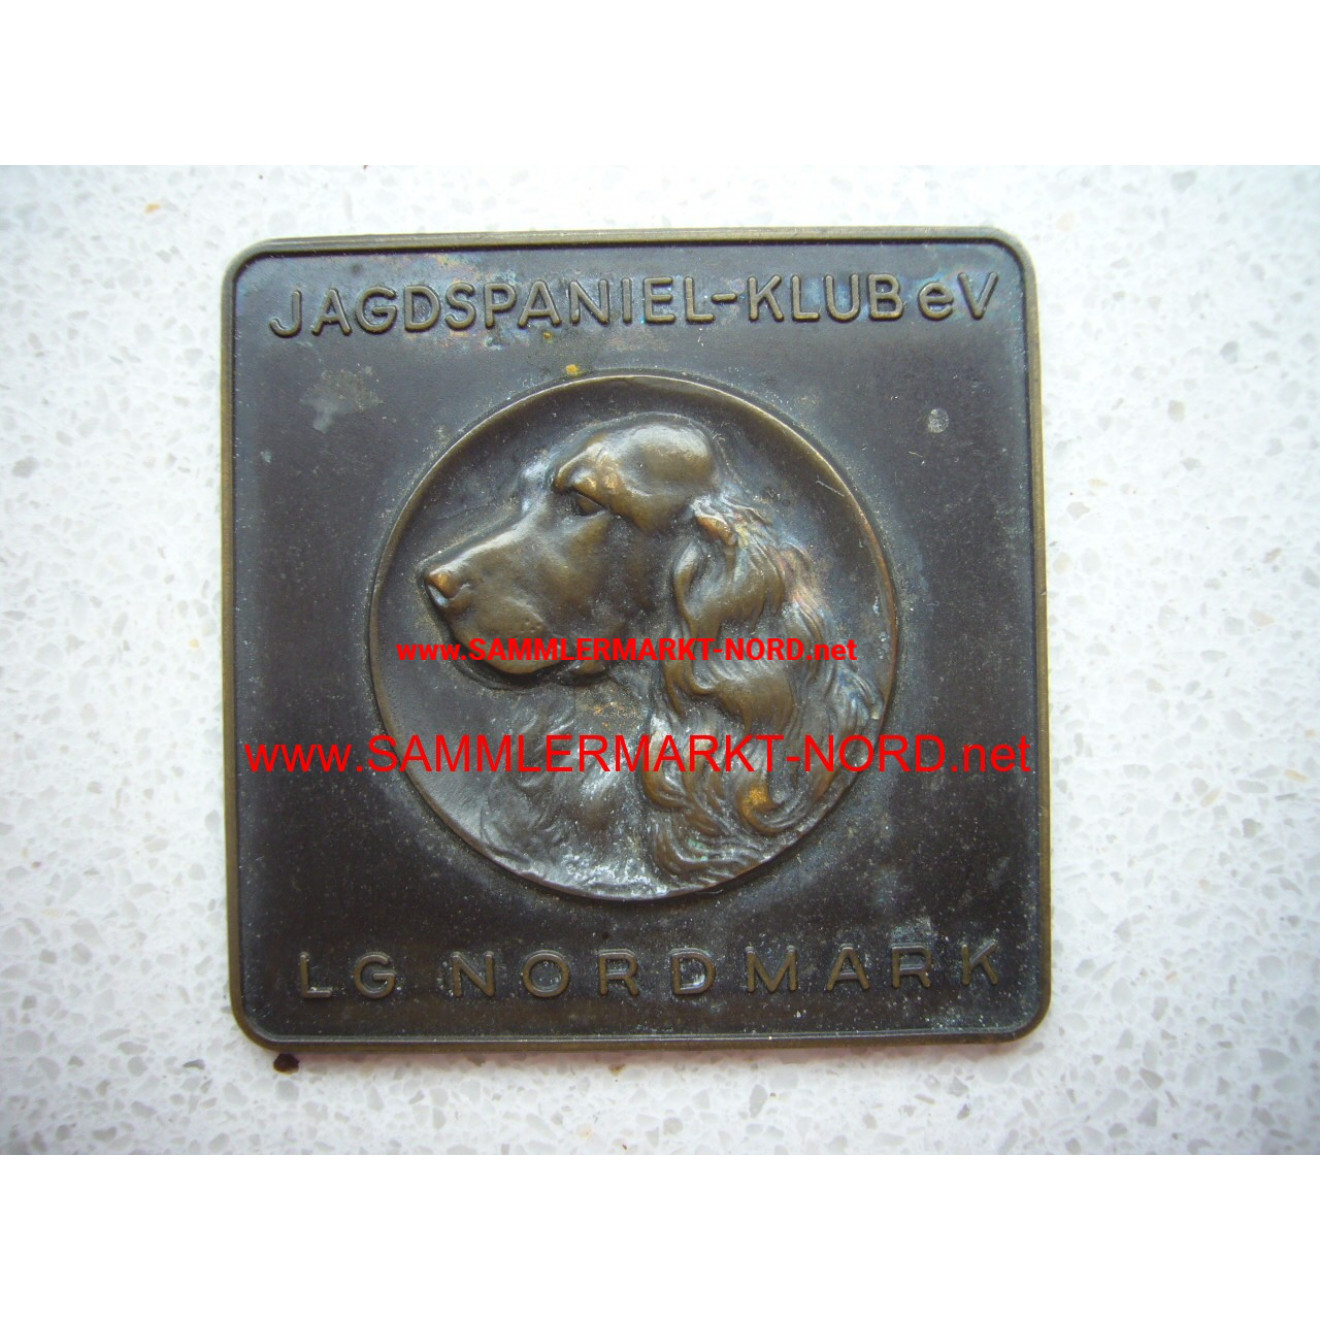 Jagdspaniel Club e.V. - LG Nordmark - Honor badge